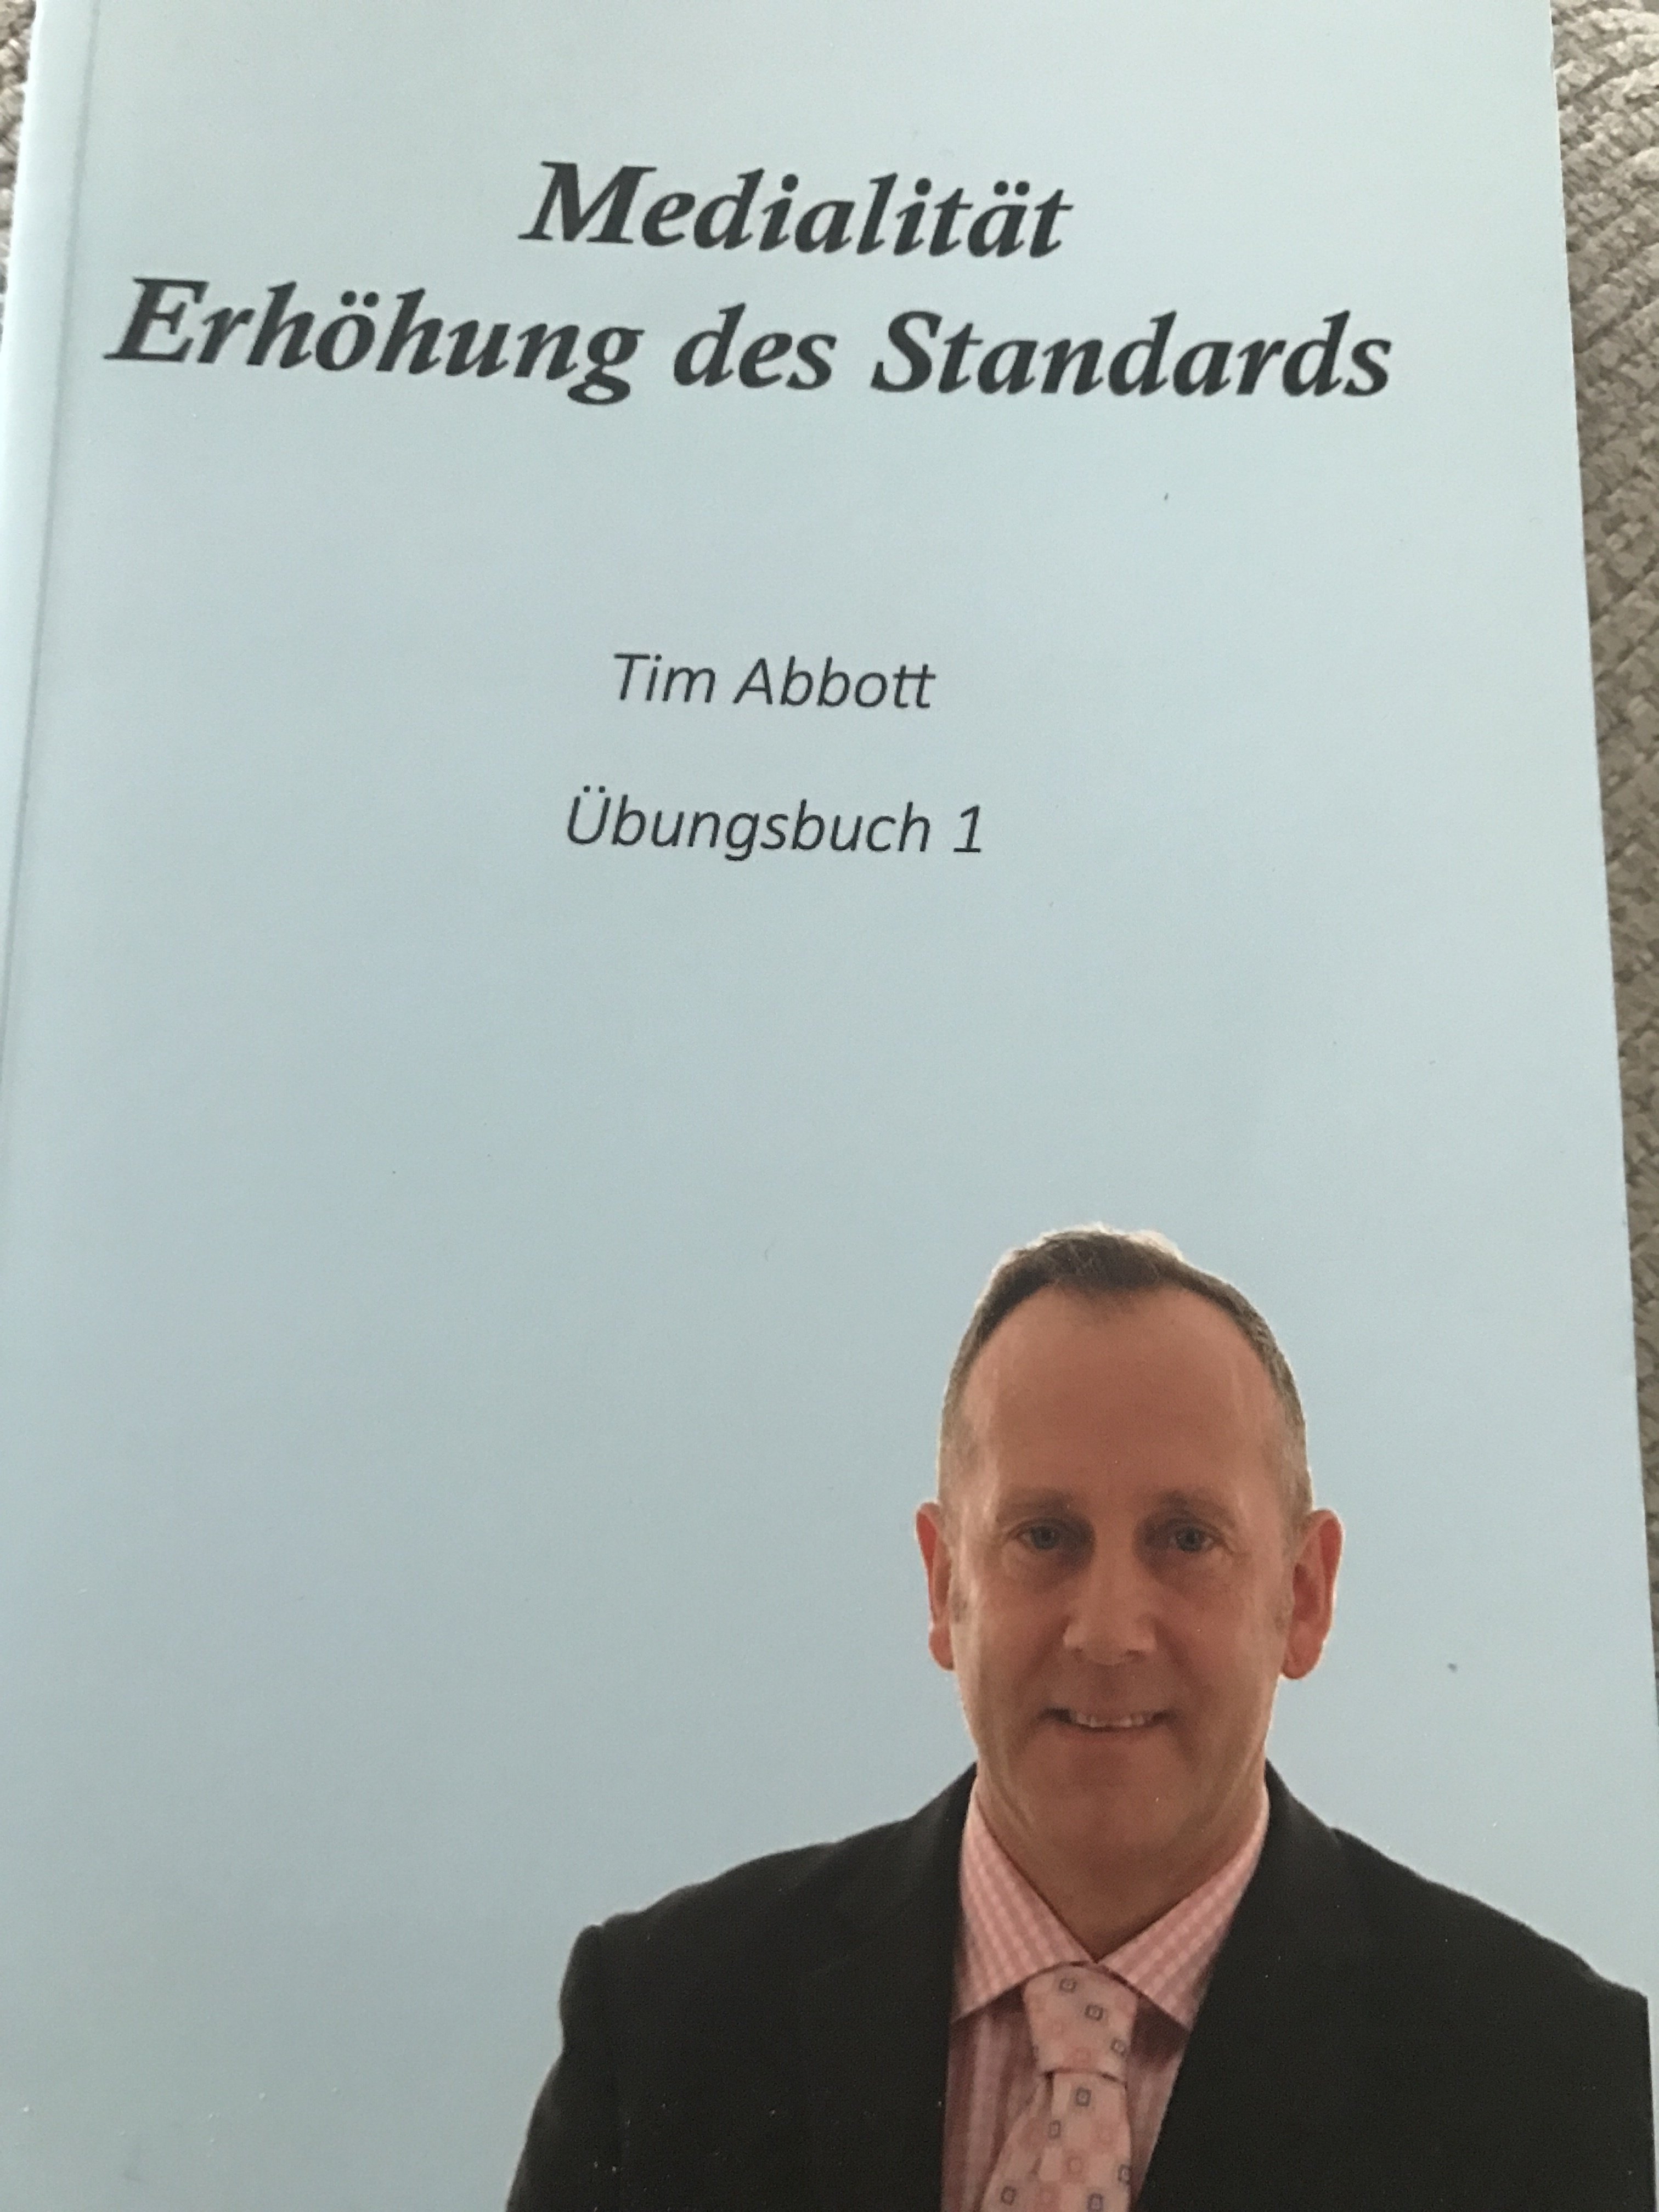 GERMAN-VERSION-BOOK-1 EMAILED VERSION-Medialitat-Erhohung-des-standards-Ubungsbuch-1 00005